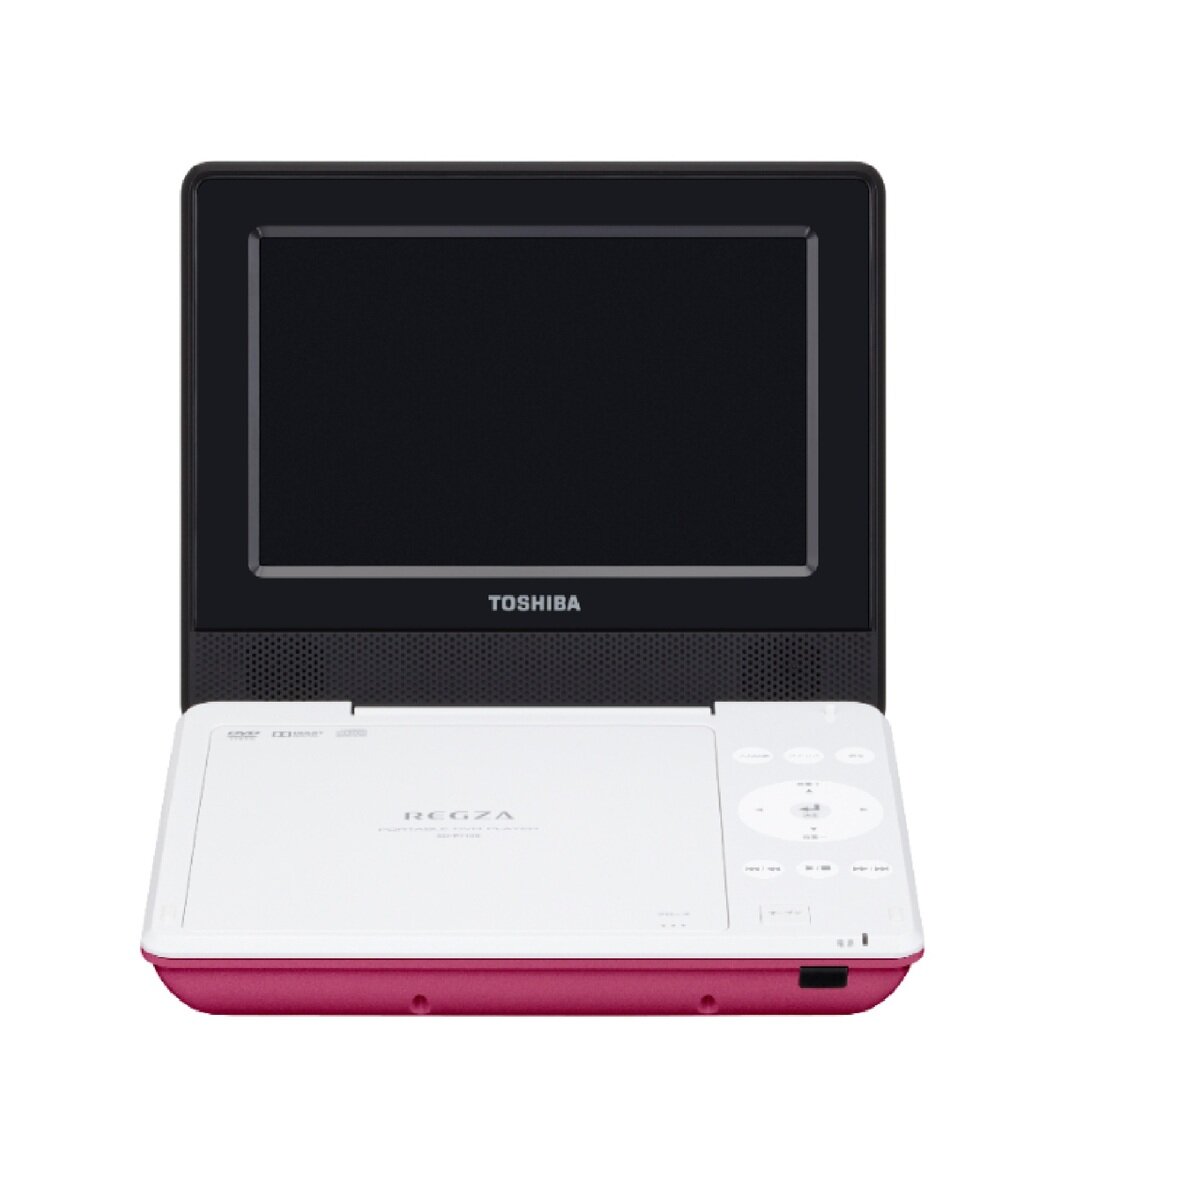 Toshiba Regza ポータブルDVDプレーヤー SD-P710S